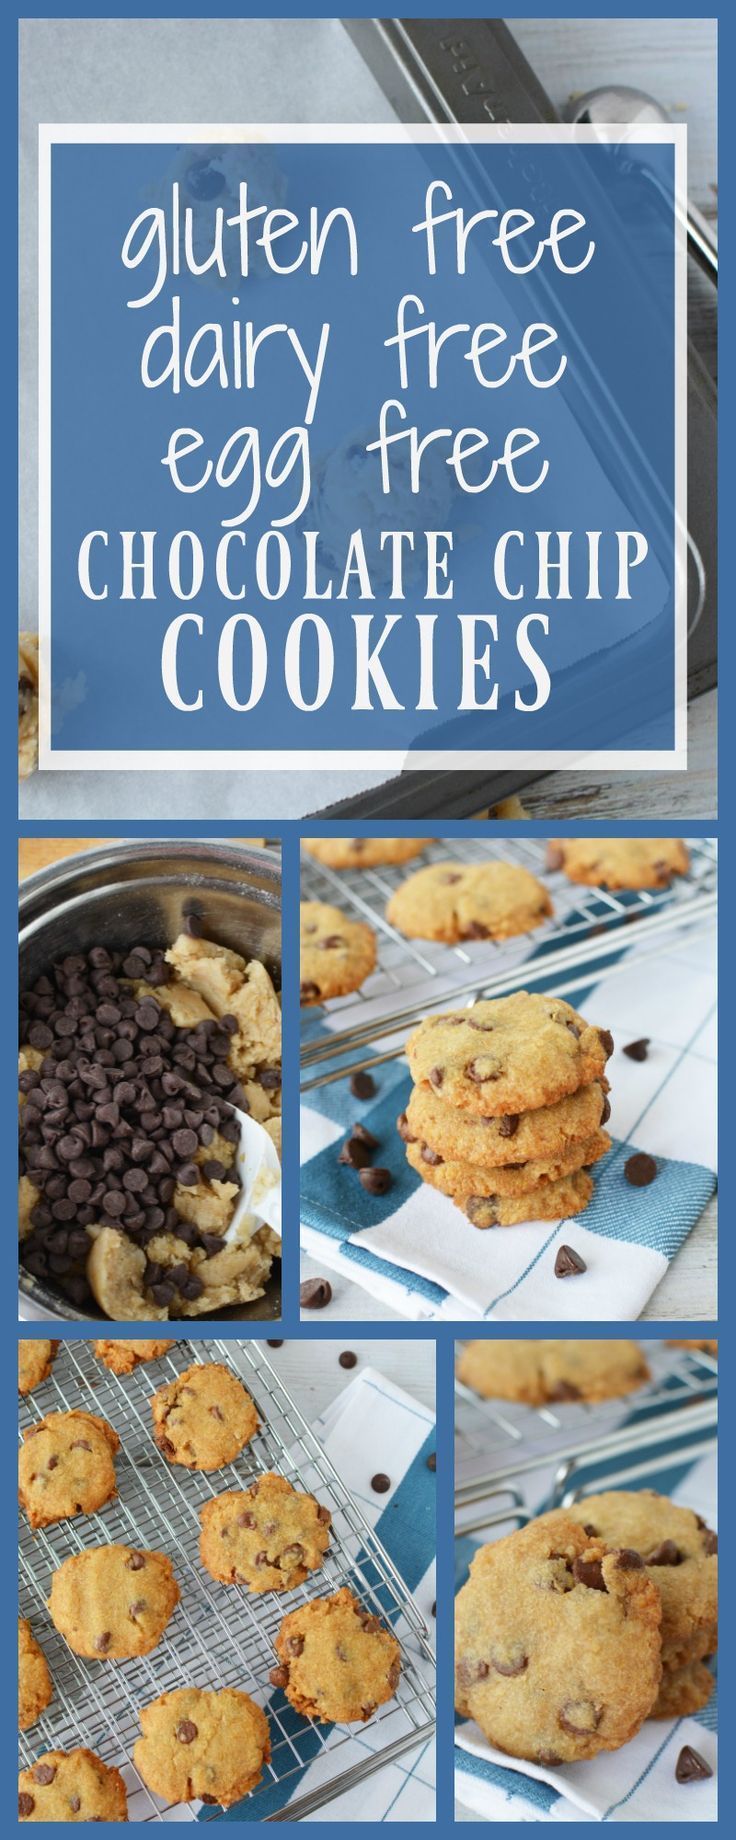 Gluten Free Chocolate Chip Cookies -   13 healthy recipes Gluten Free chocolate chip cookies ideas